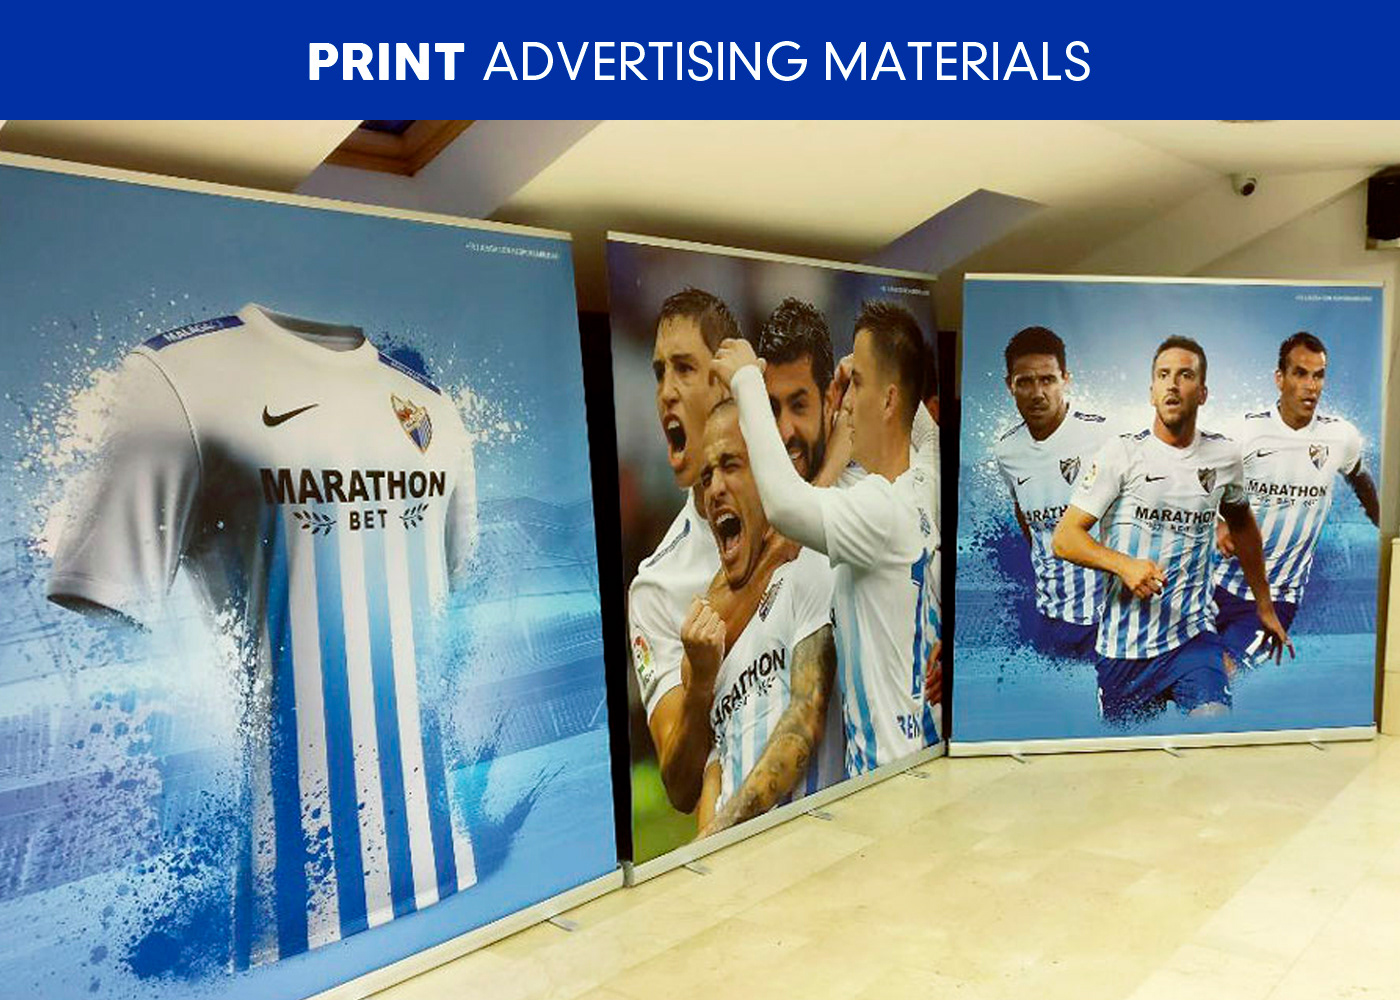 Málaga cf Futbol football Sponsorship print ad digital malaga anúncio ad sponsor